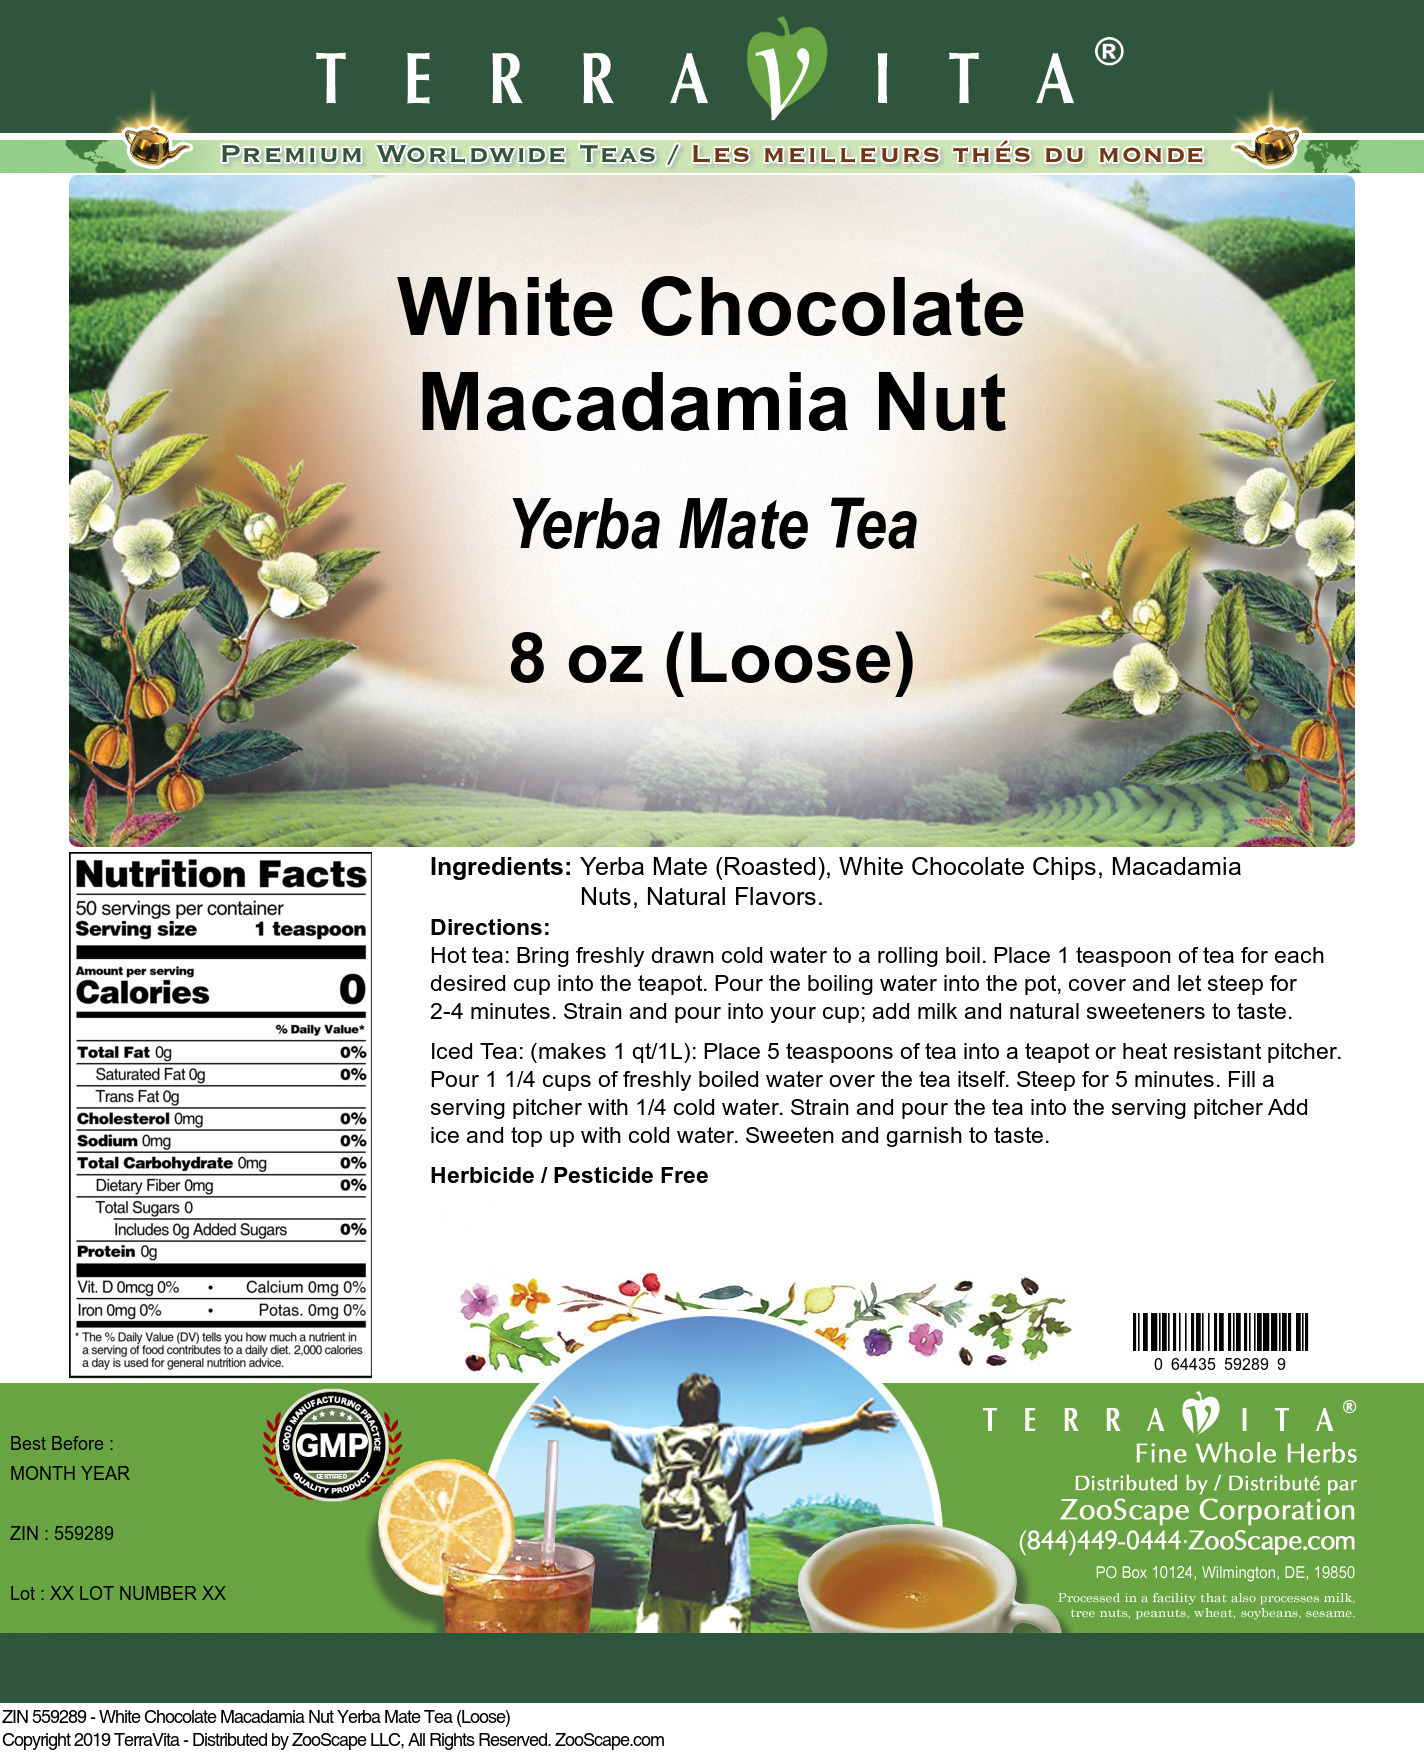 White Chocolate Macadamia Nut Yerba Mate Tea (Loose) - Label